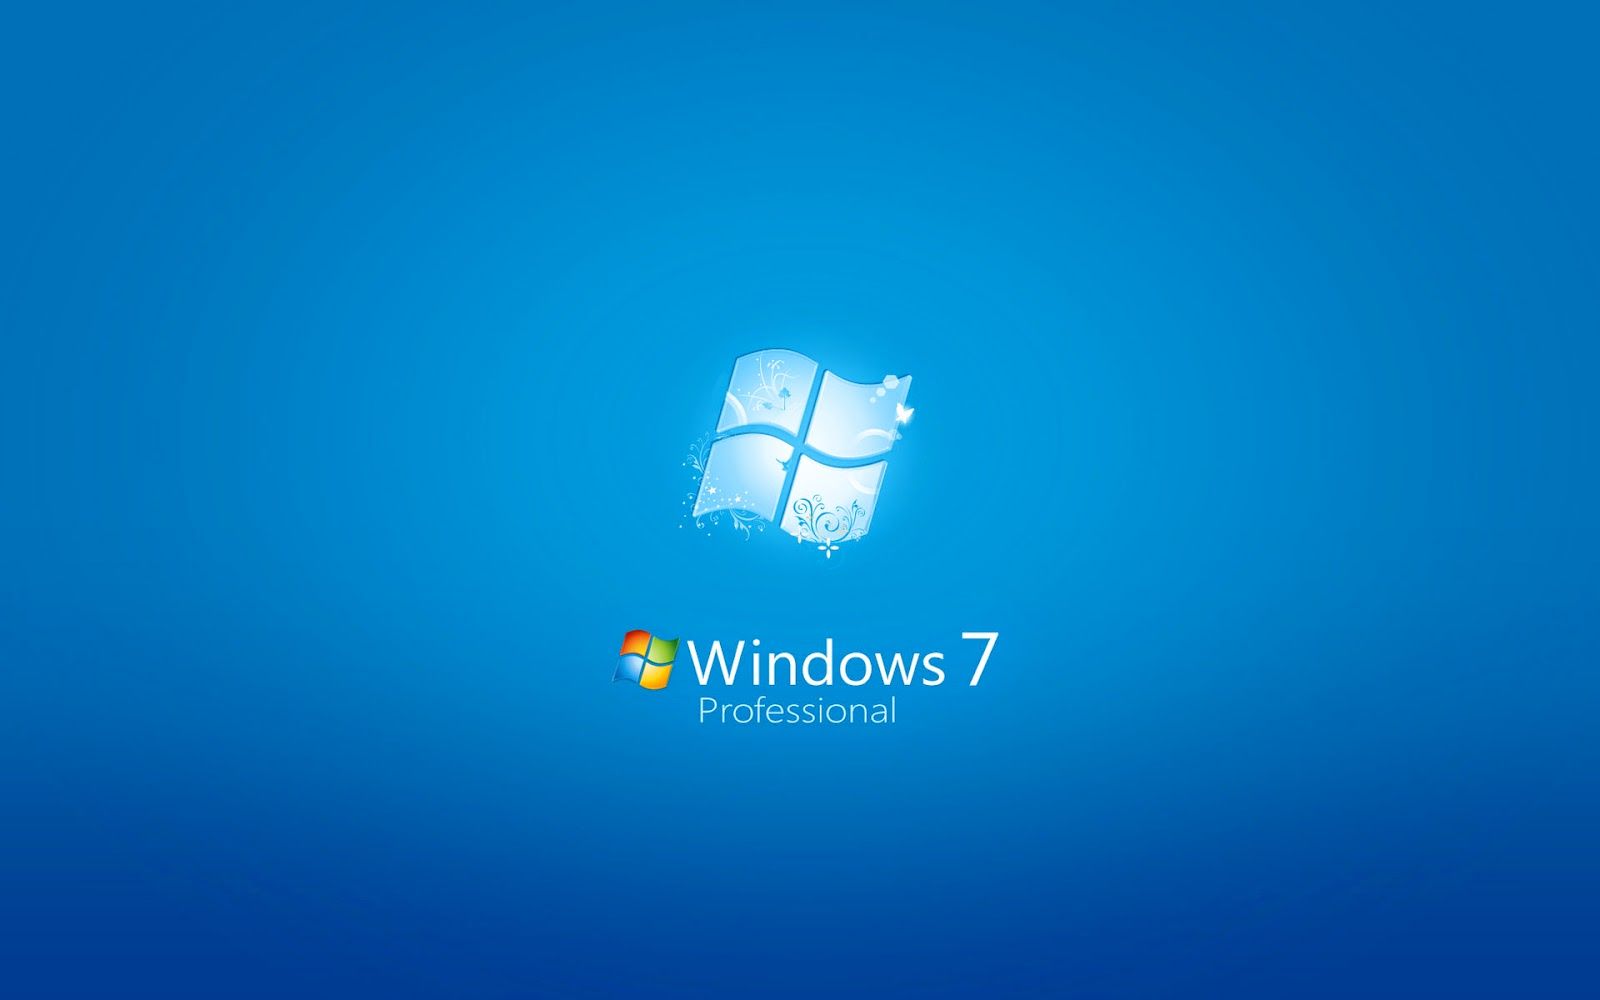 windows 7 images for desktop | WhatsApp Girls Number | Wallpapers ...